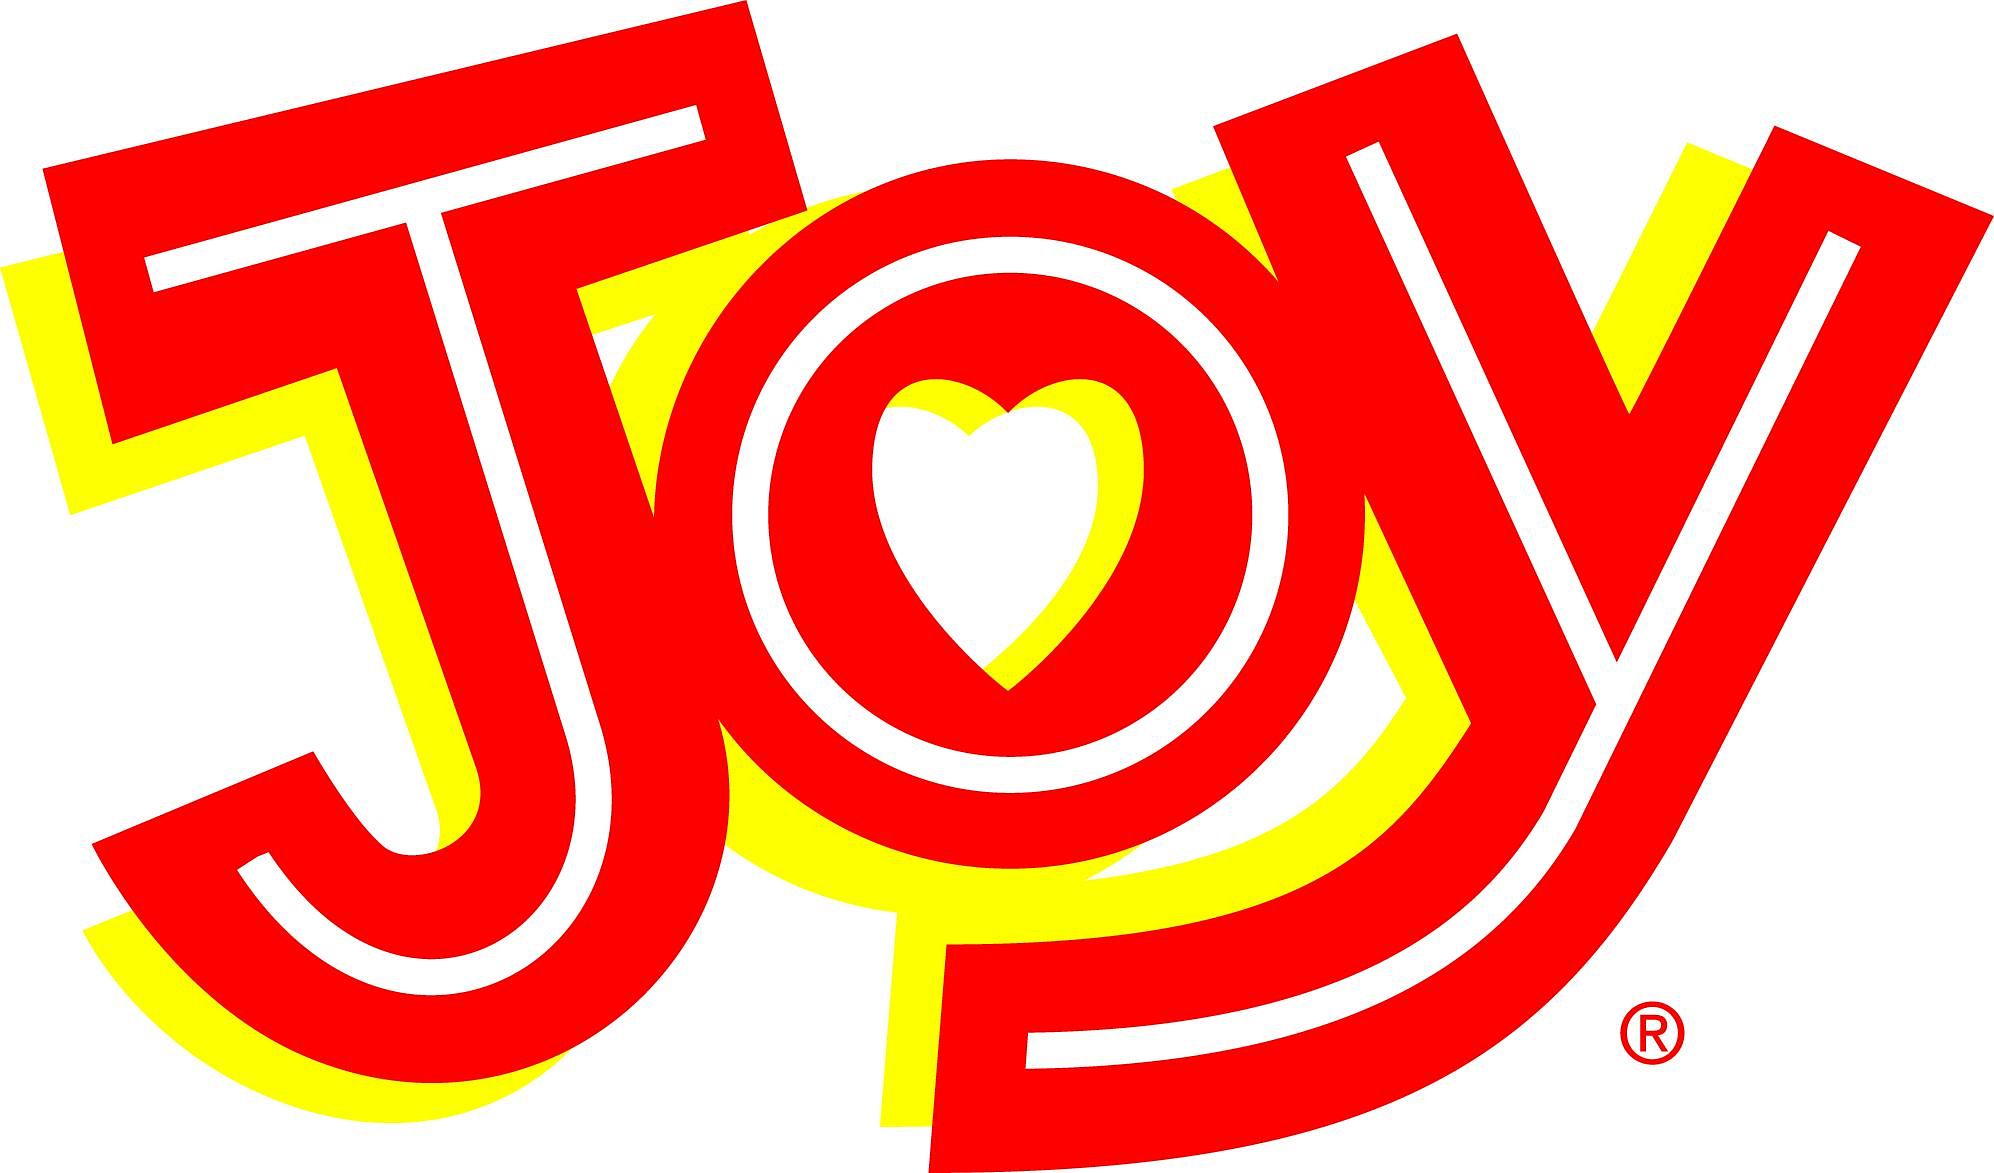 Joy Cone Company, Inc